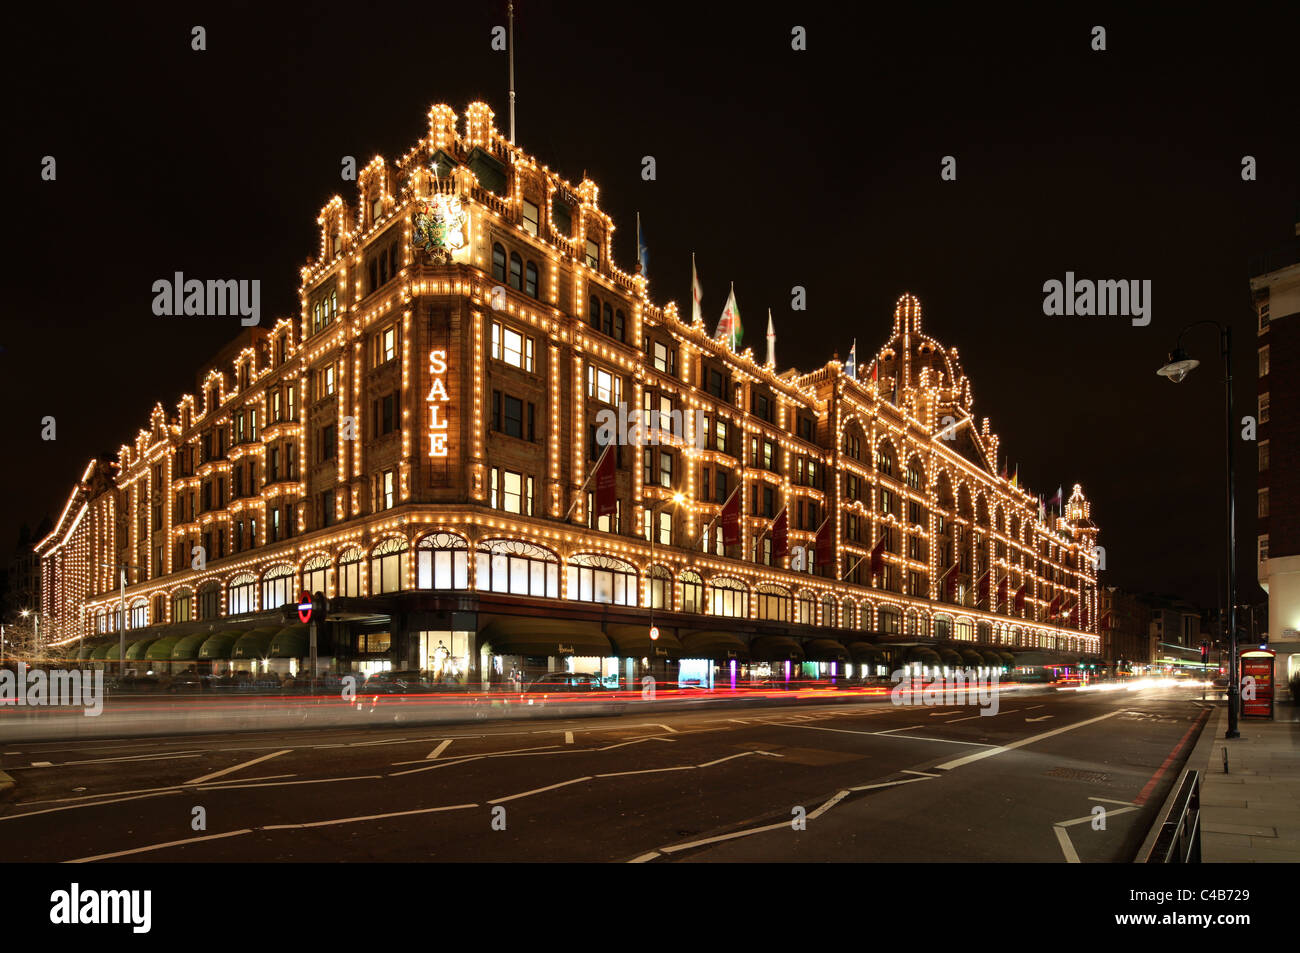 The famous Harrods Department Store in London Knightsbridge. Stock Photo